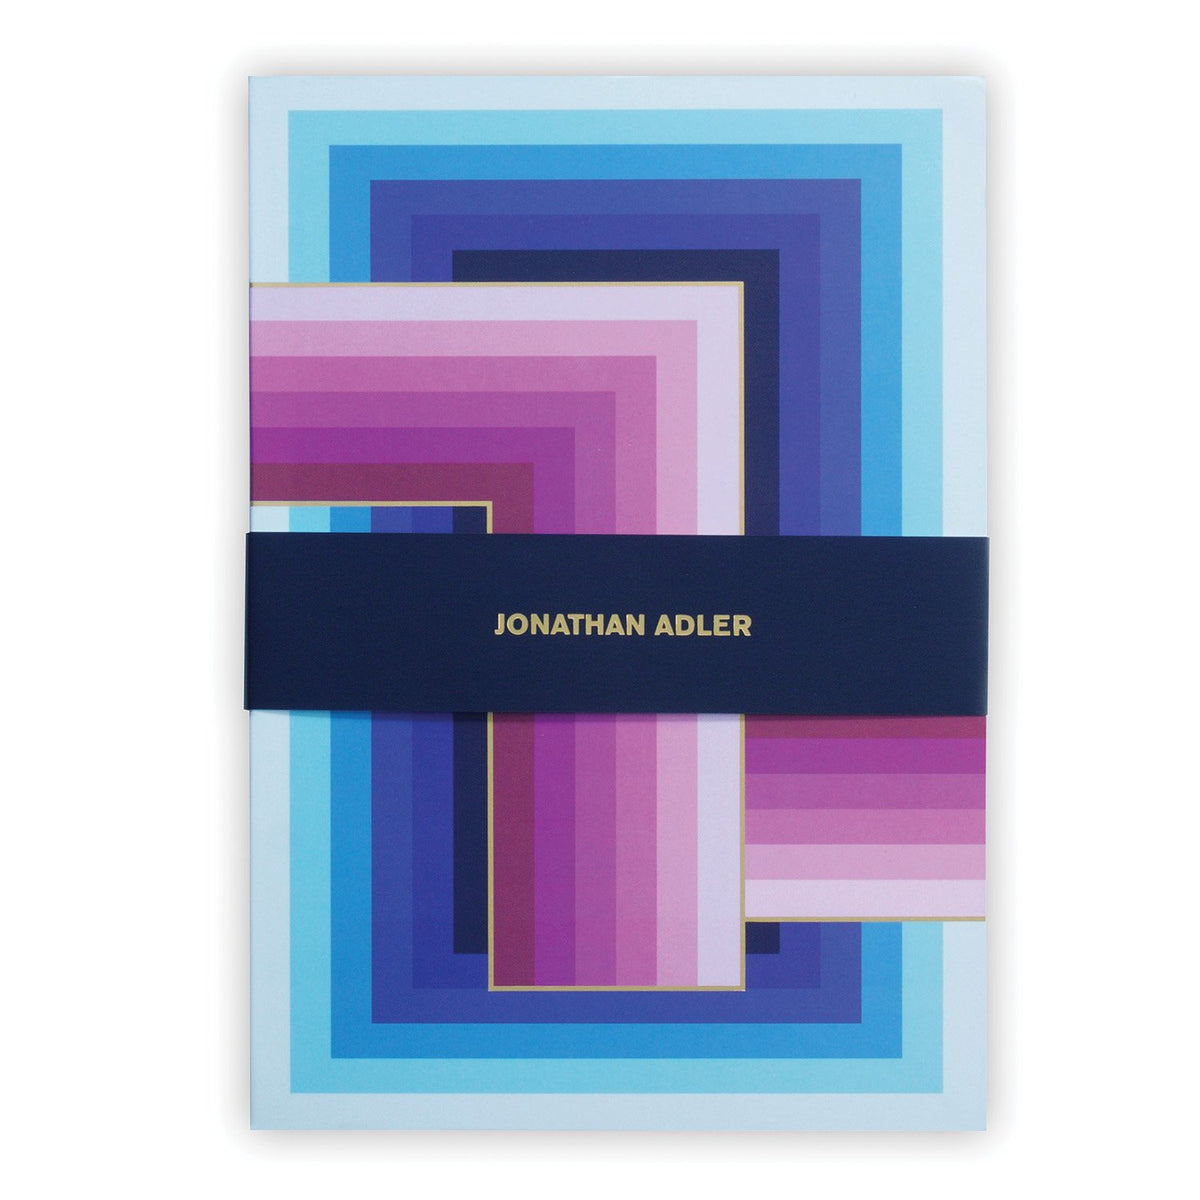 Jonathan Adler Infinity A5 Notebook Journals and Notebooks Jonathan Adler Collection 